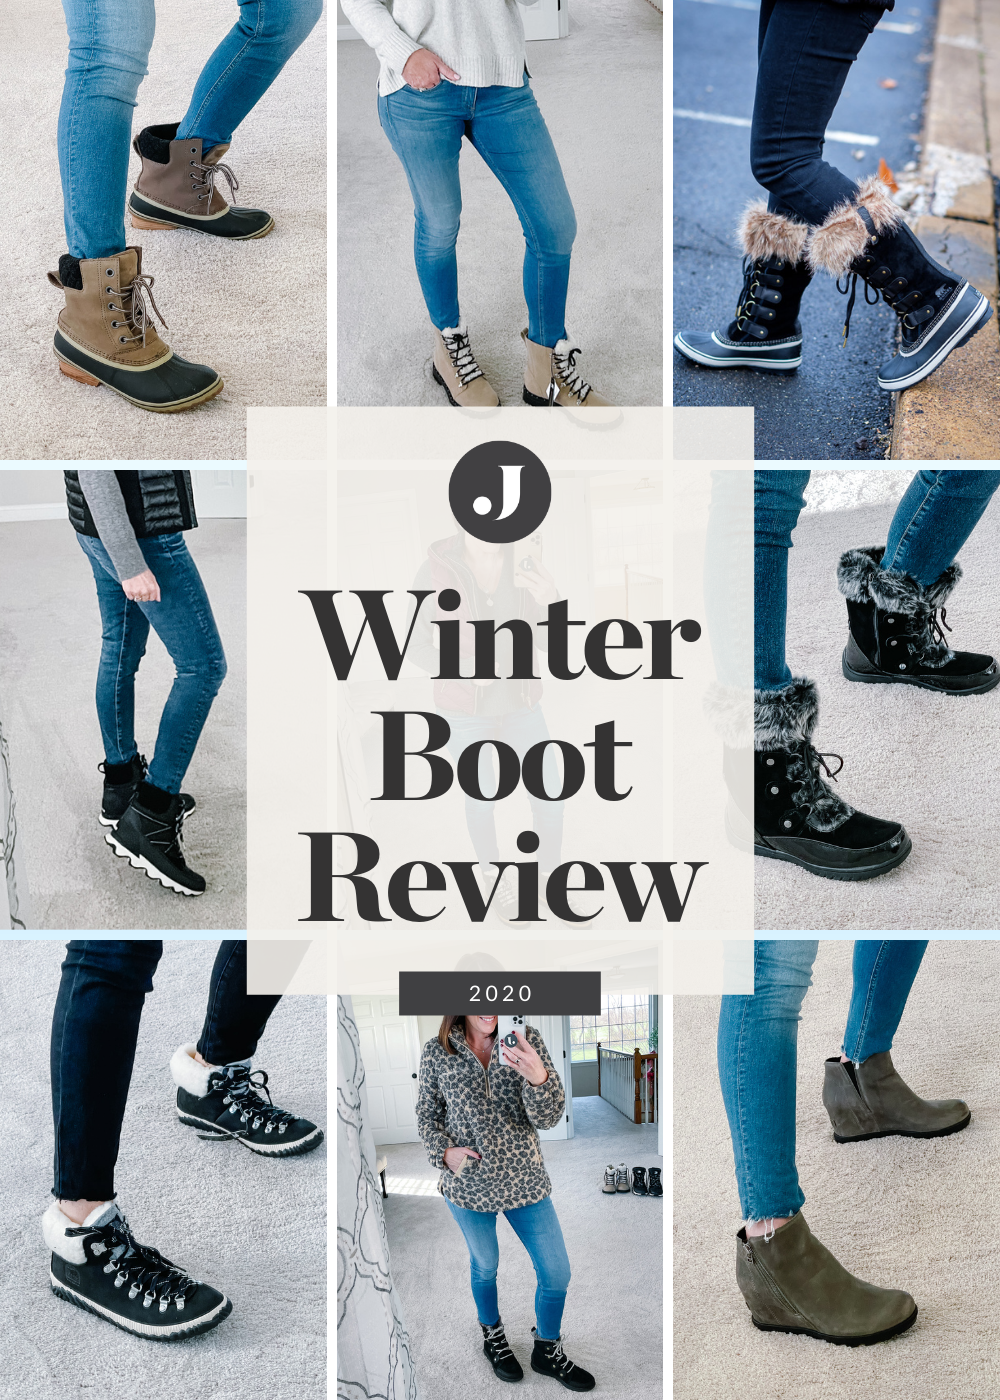 Review Comparison & Winter Boot